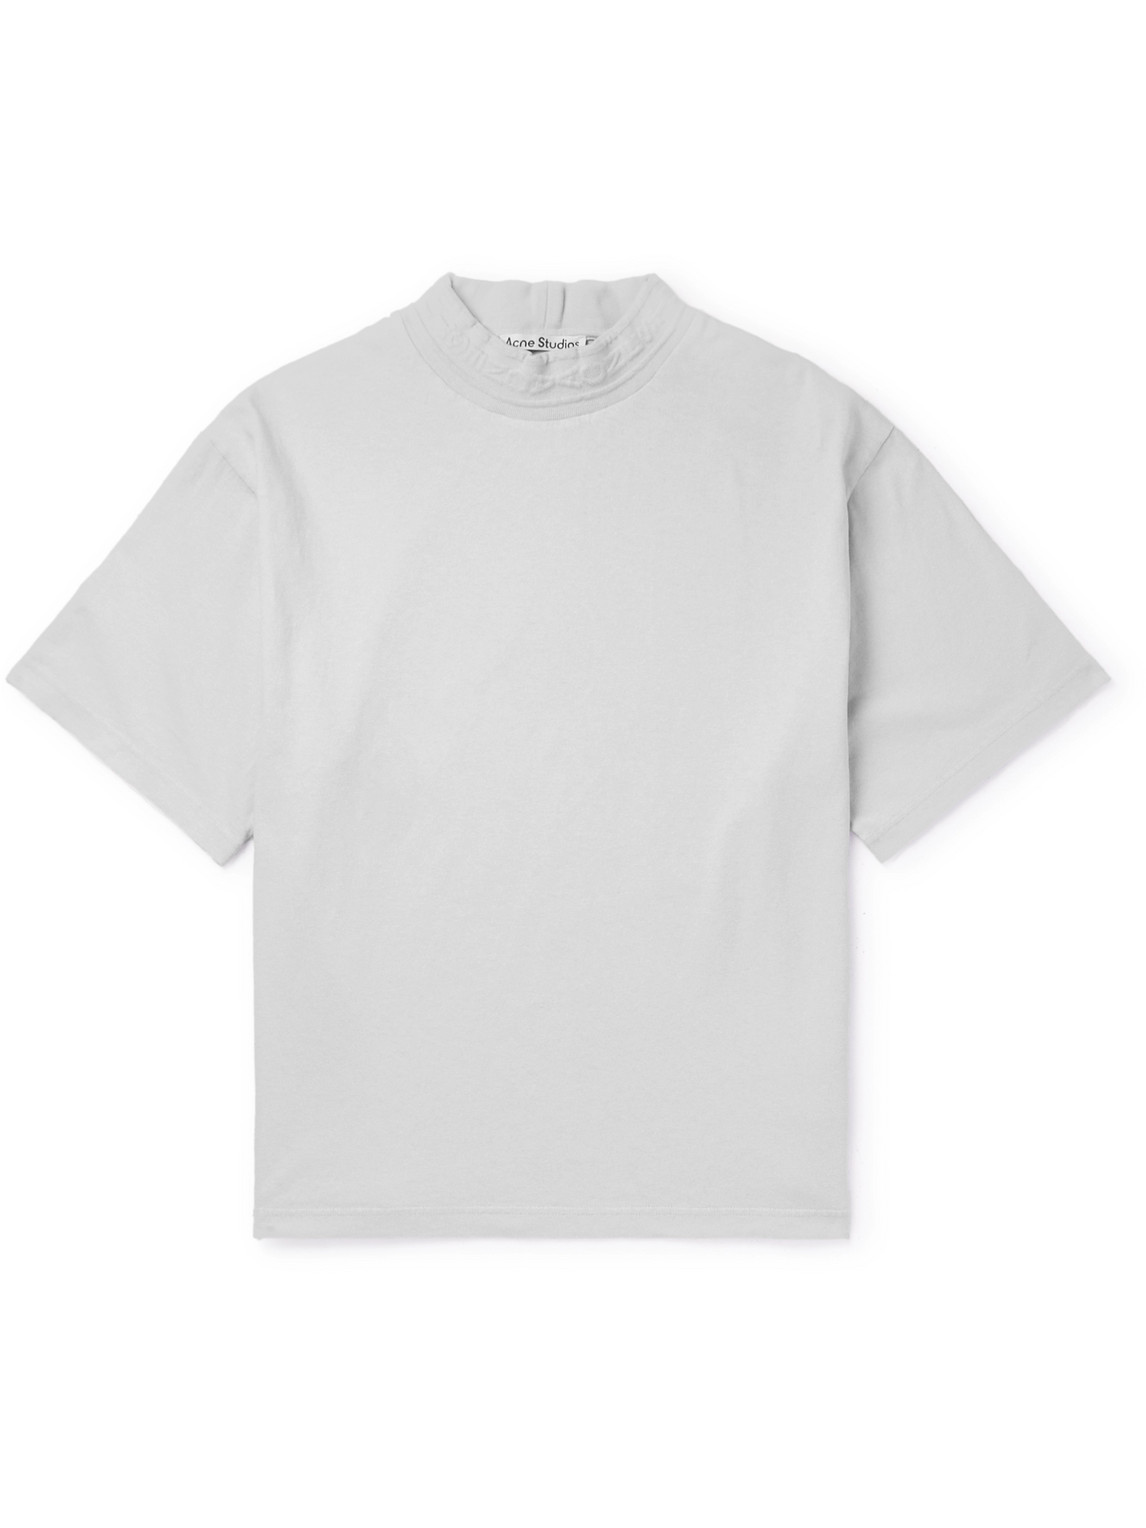 Acne Studios Elco Chain Cotton-Jersey T-Shirt